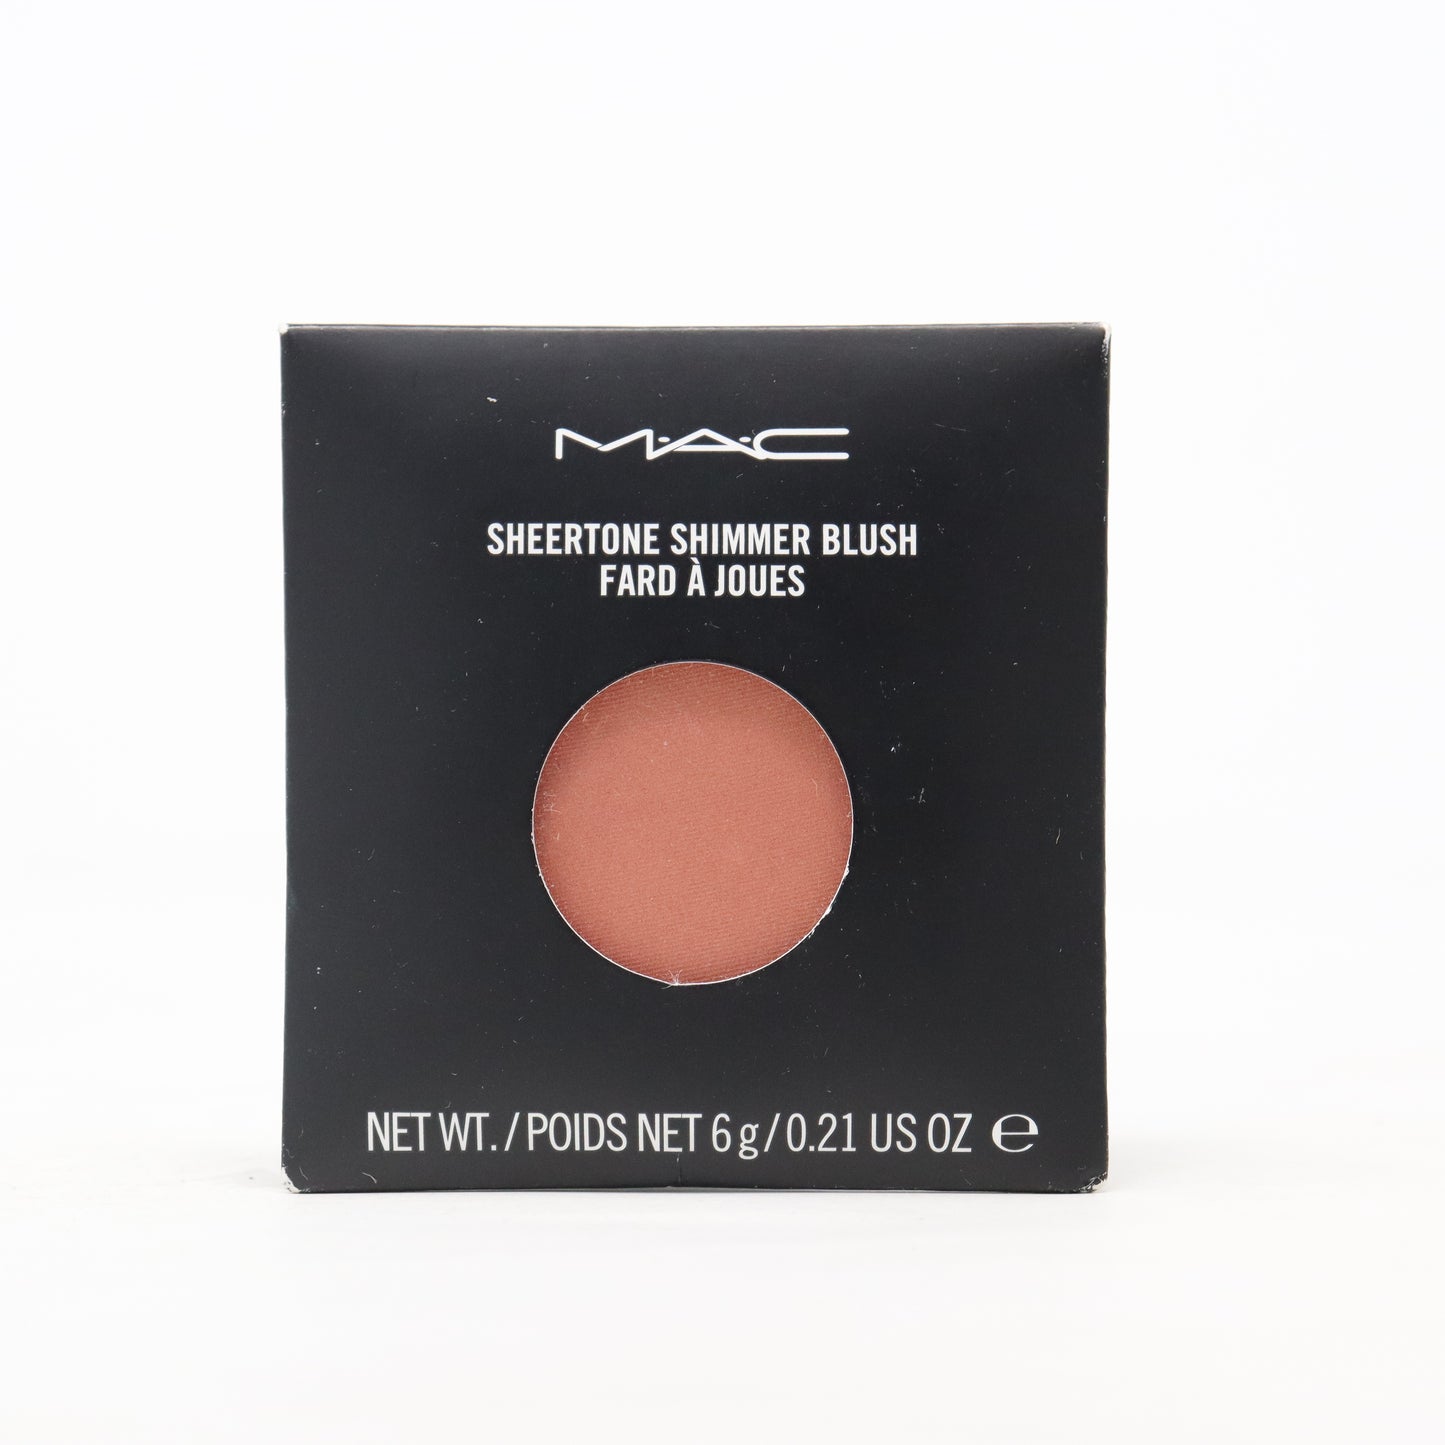 Sheertone Shimmer Blush Refill 6.0 g